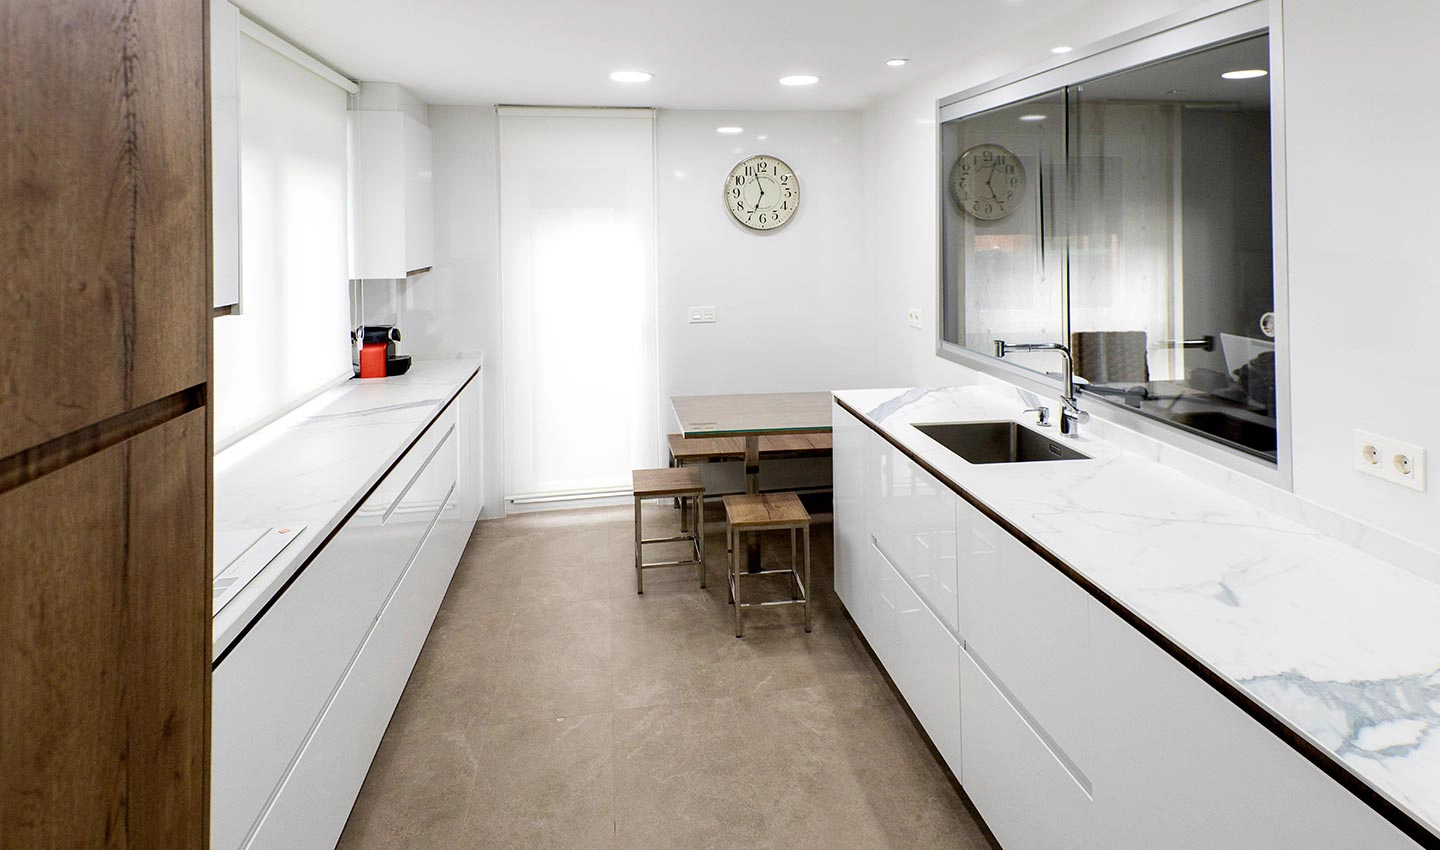 Vista de cocina moderna con carácter nórdico y frentes en paralelo con gran espacio para almacenaje.